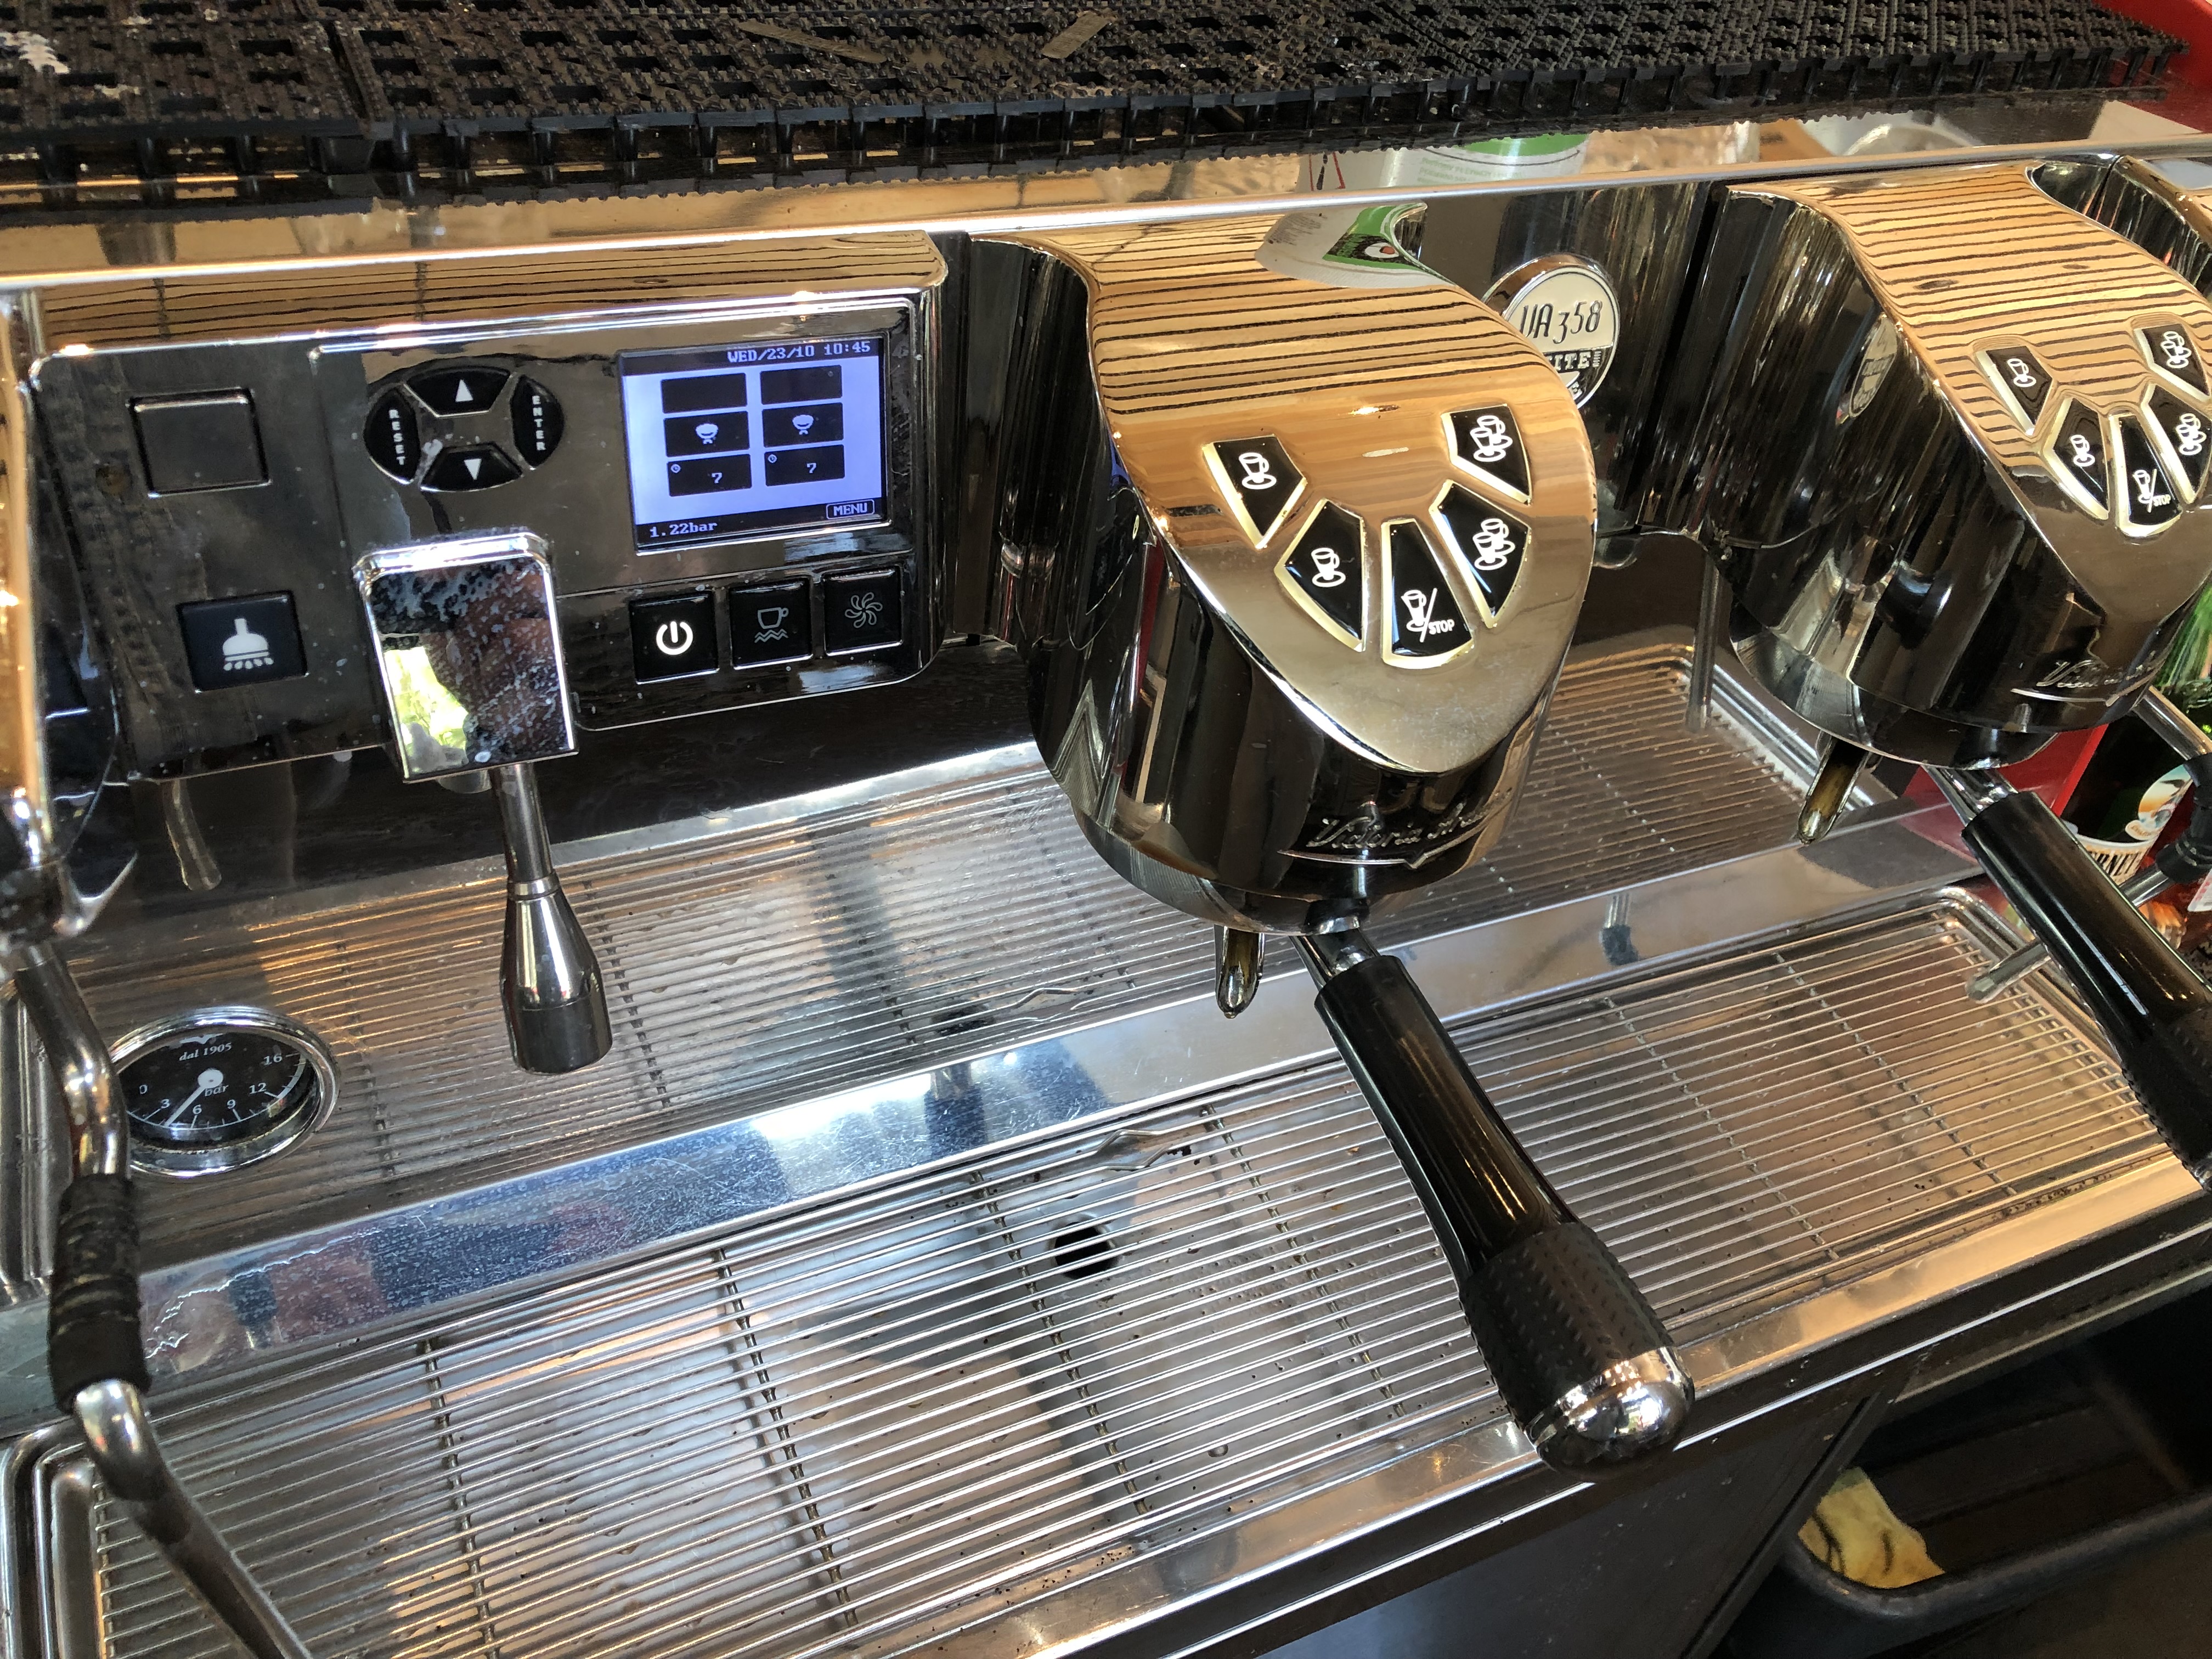 3 group espresso machine espresso machine installation espresso machine sales Espresso machine repair